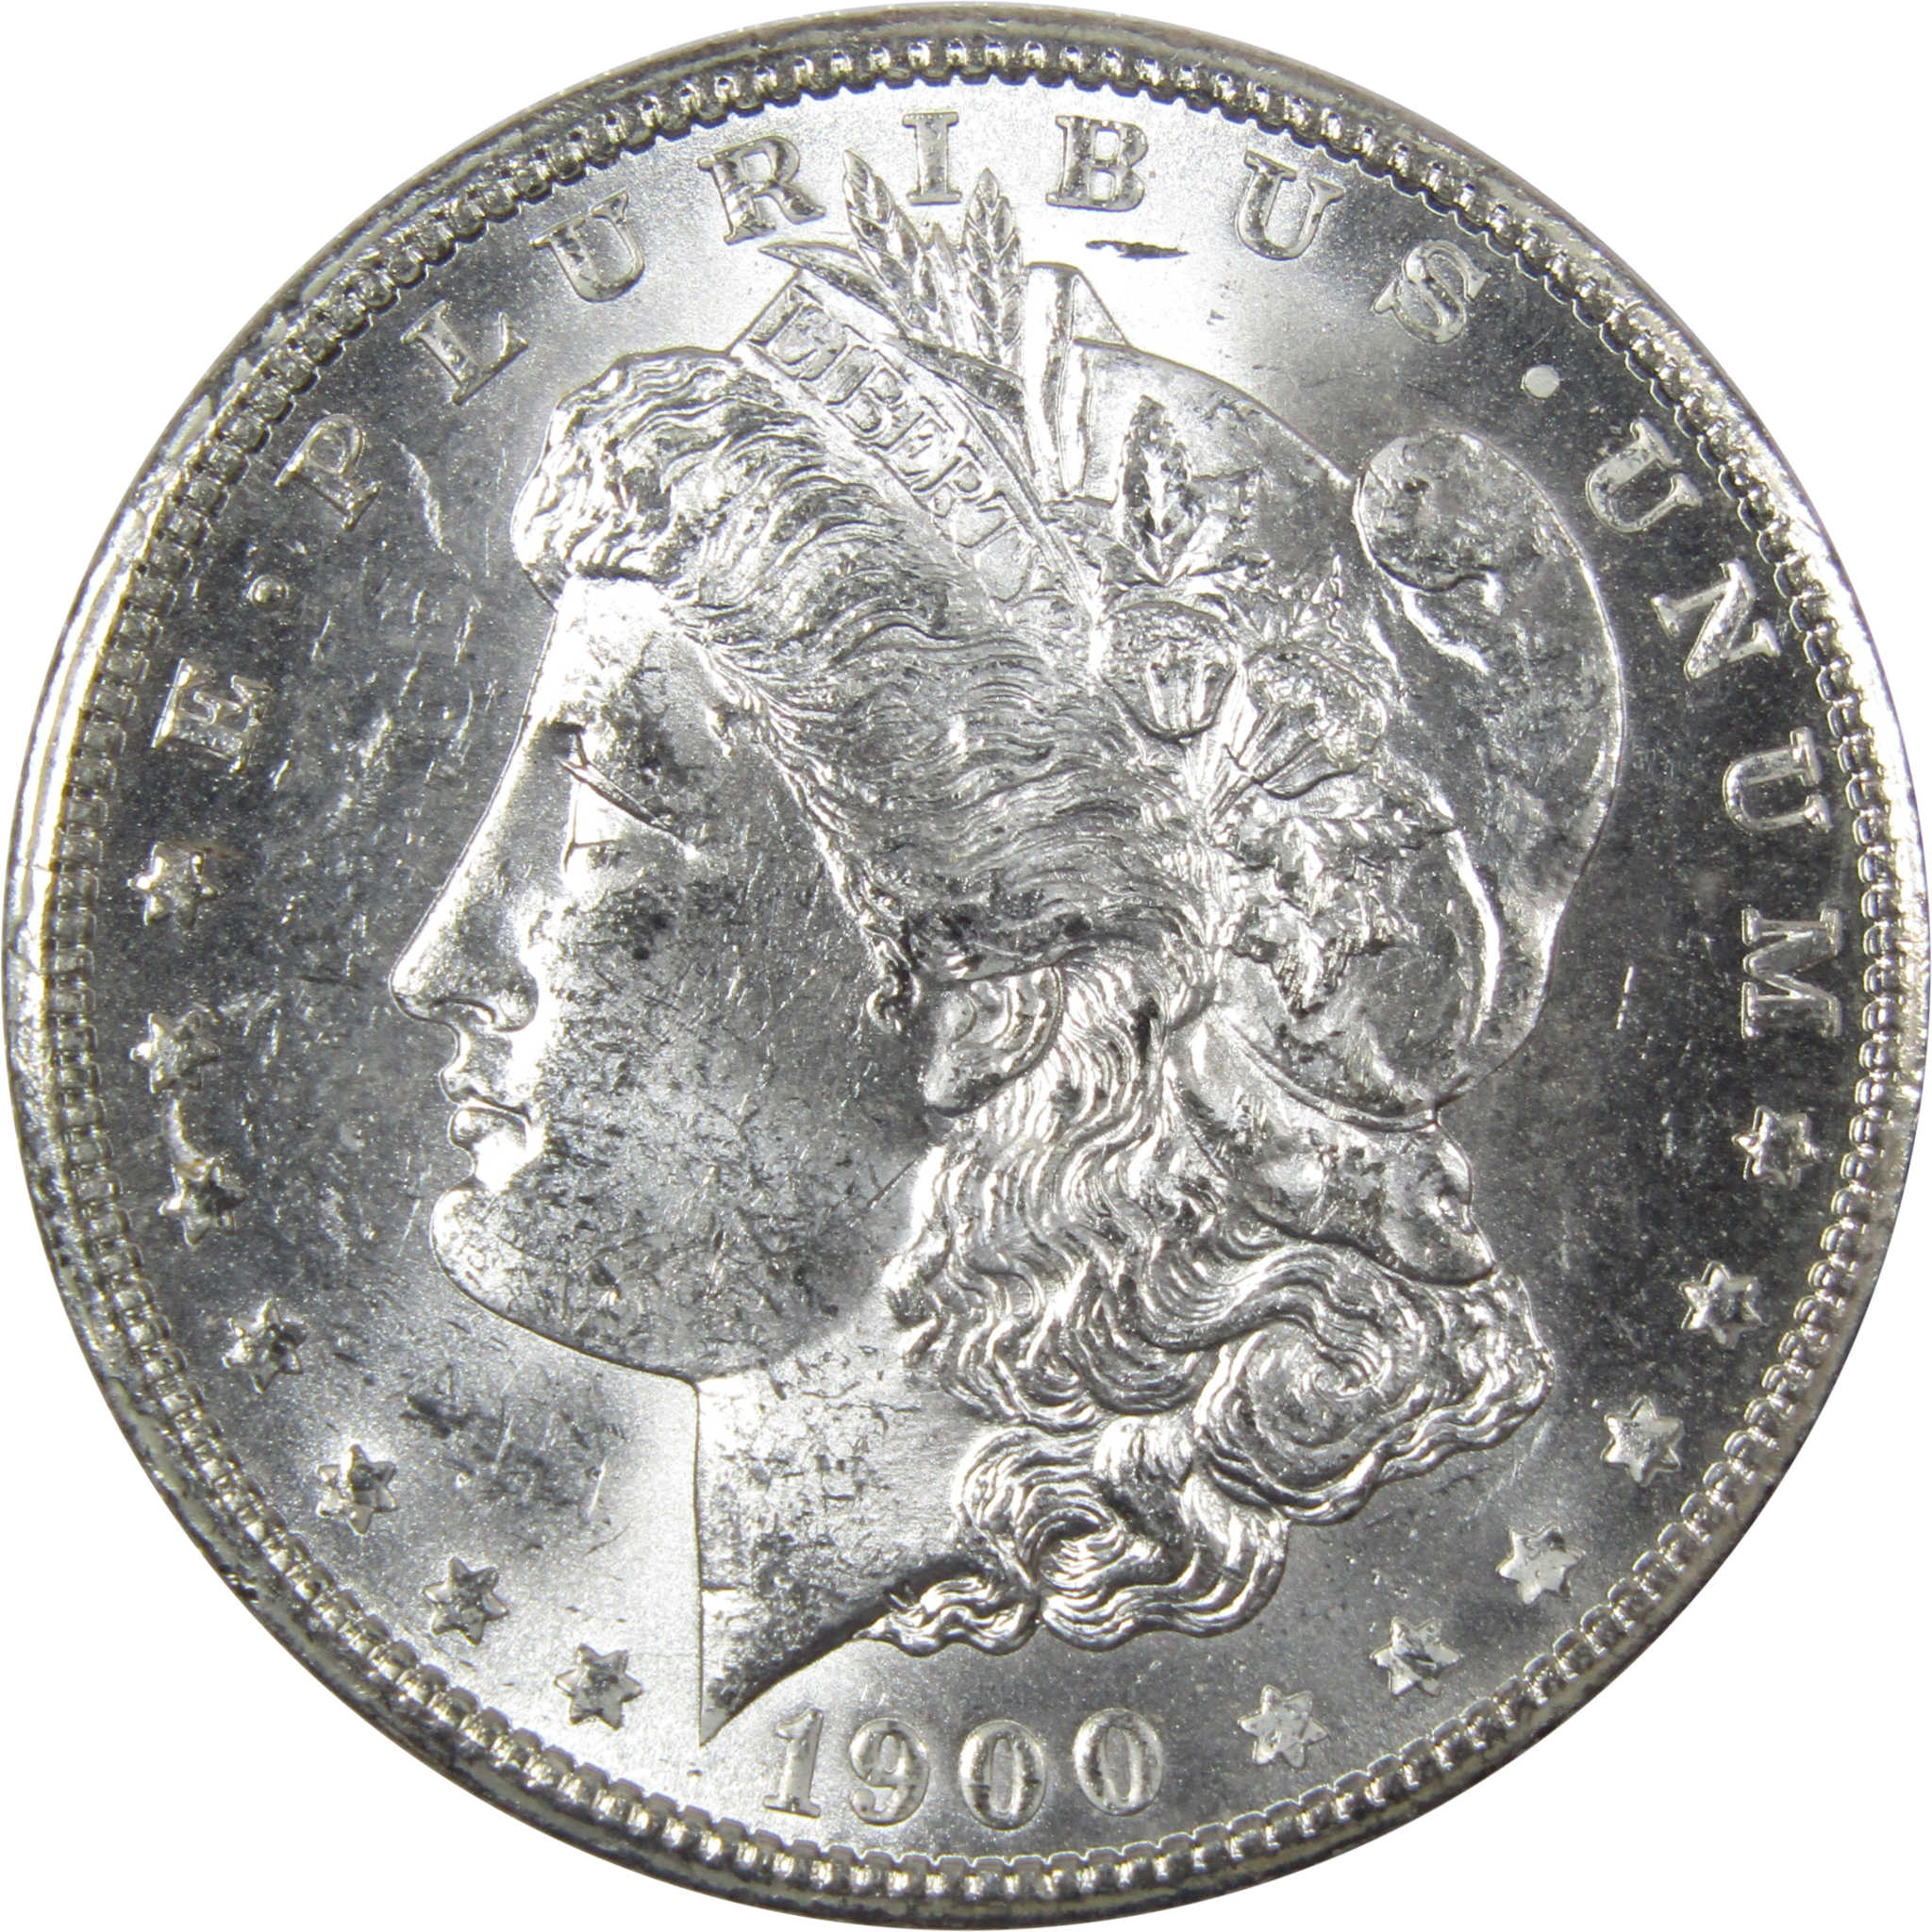 1900 O Morgan Dollar BU Uncirculated Mint State 90% Silver SKU:IPC9728 - Morgan coin - Morgan silver dollar - Morgan silver dollar for sale - Profile Coins &amp; Collectibles